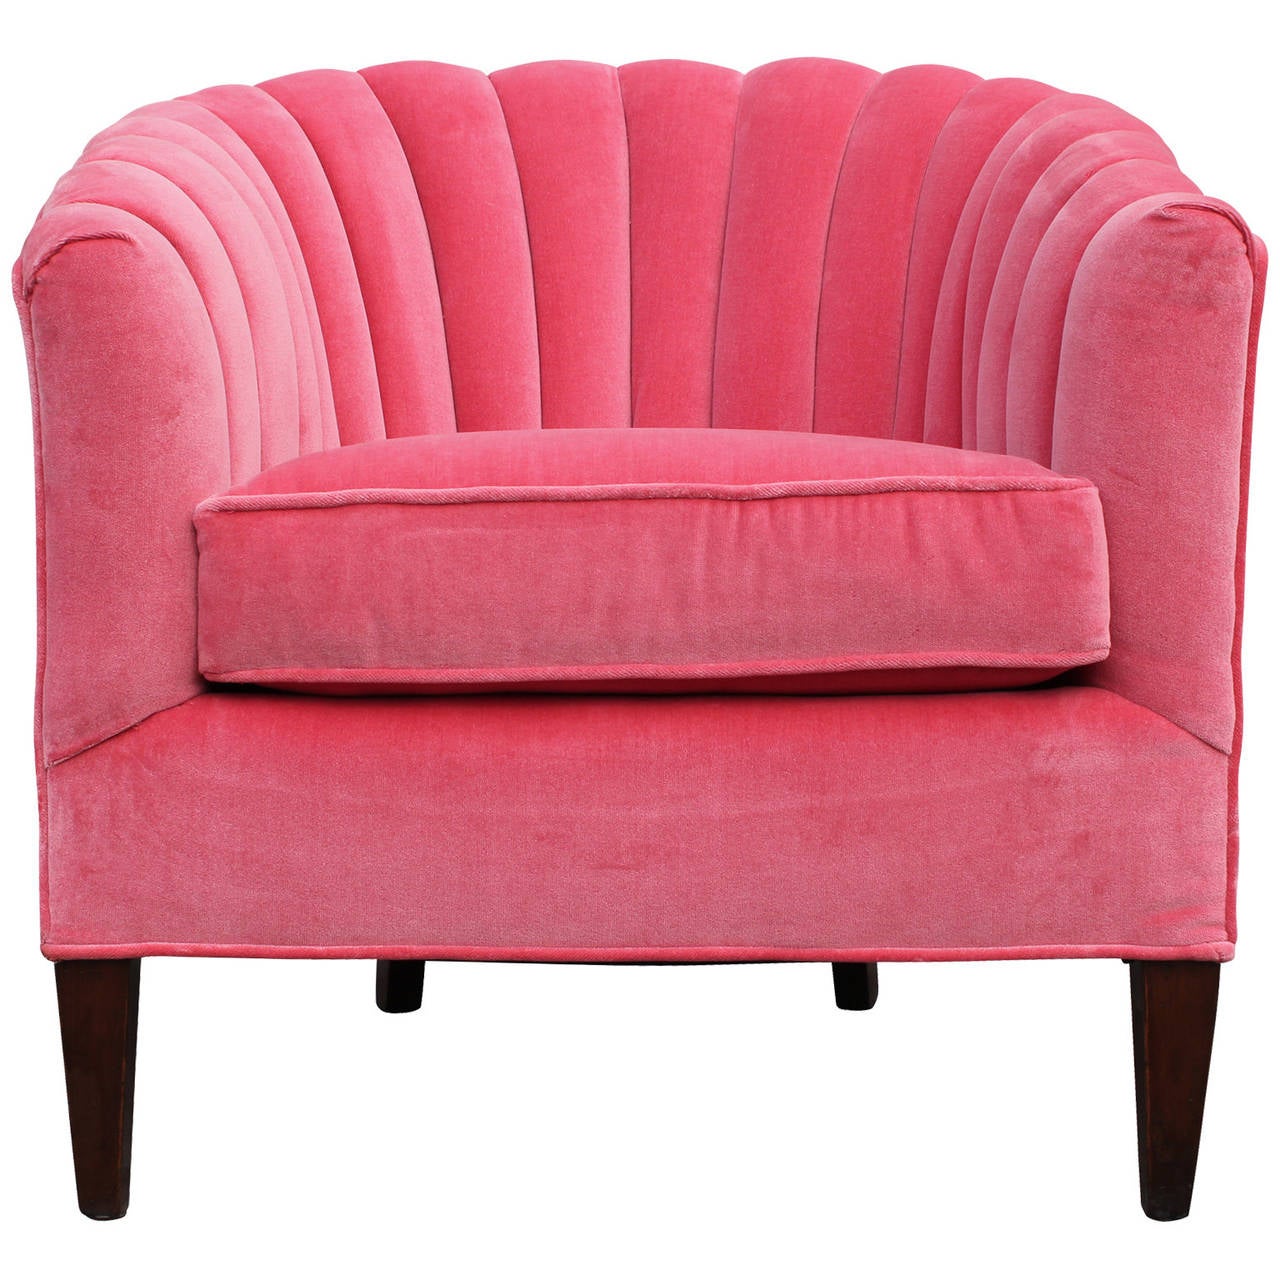 pink barrel chair